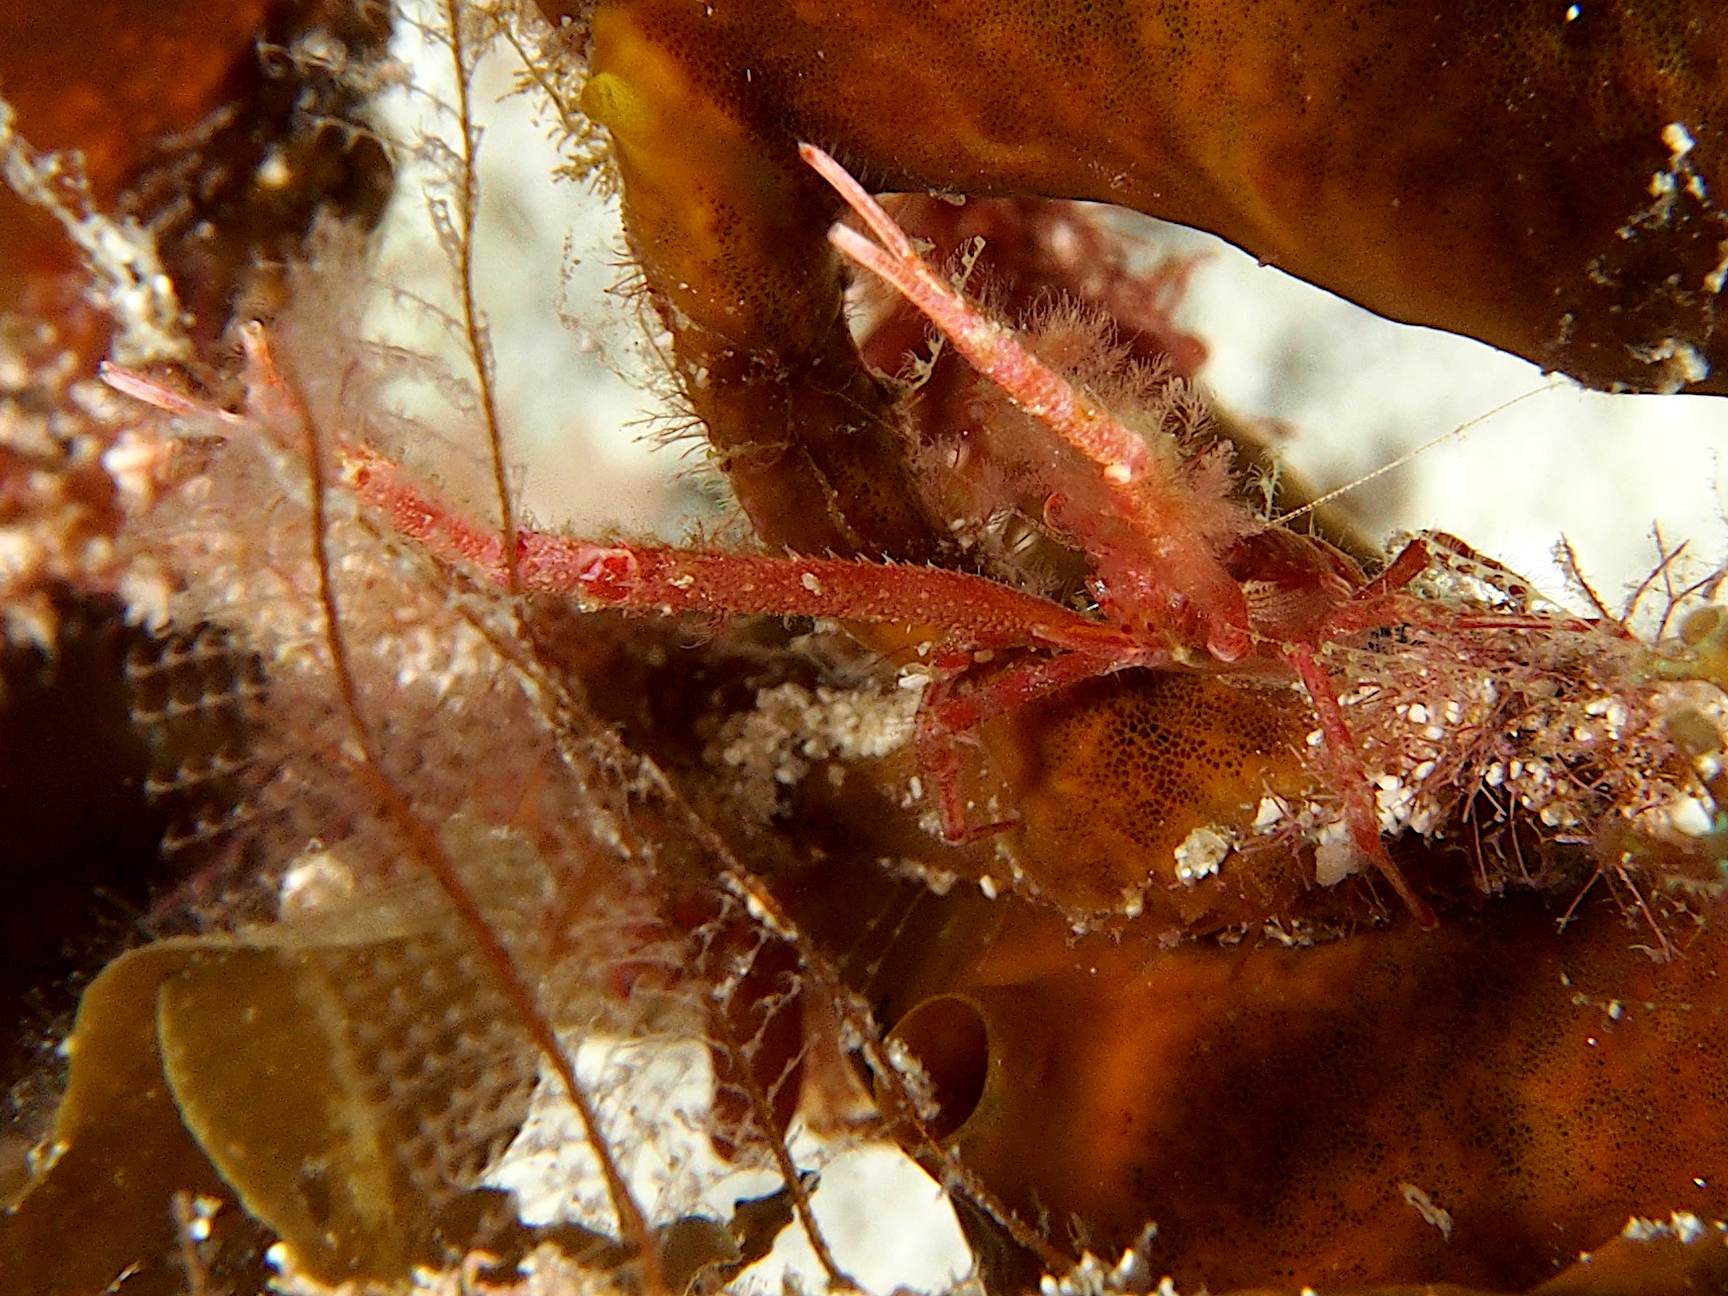 Common Squat Lobster - Munida pusilla